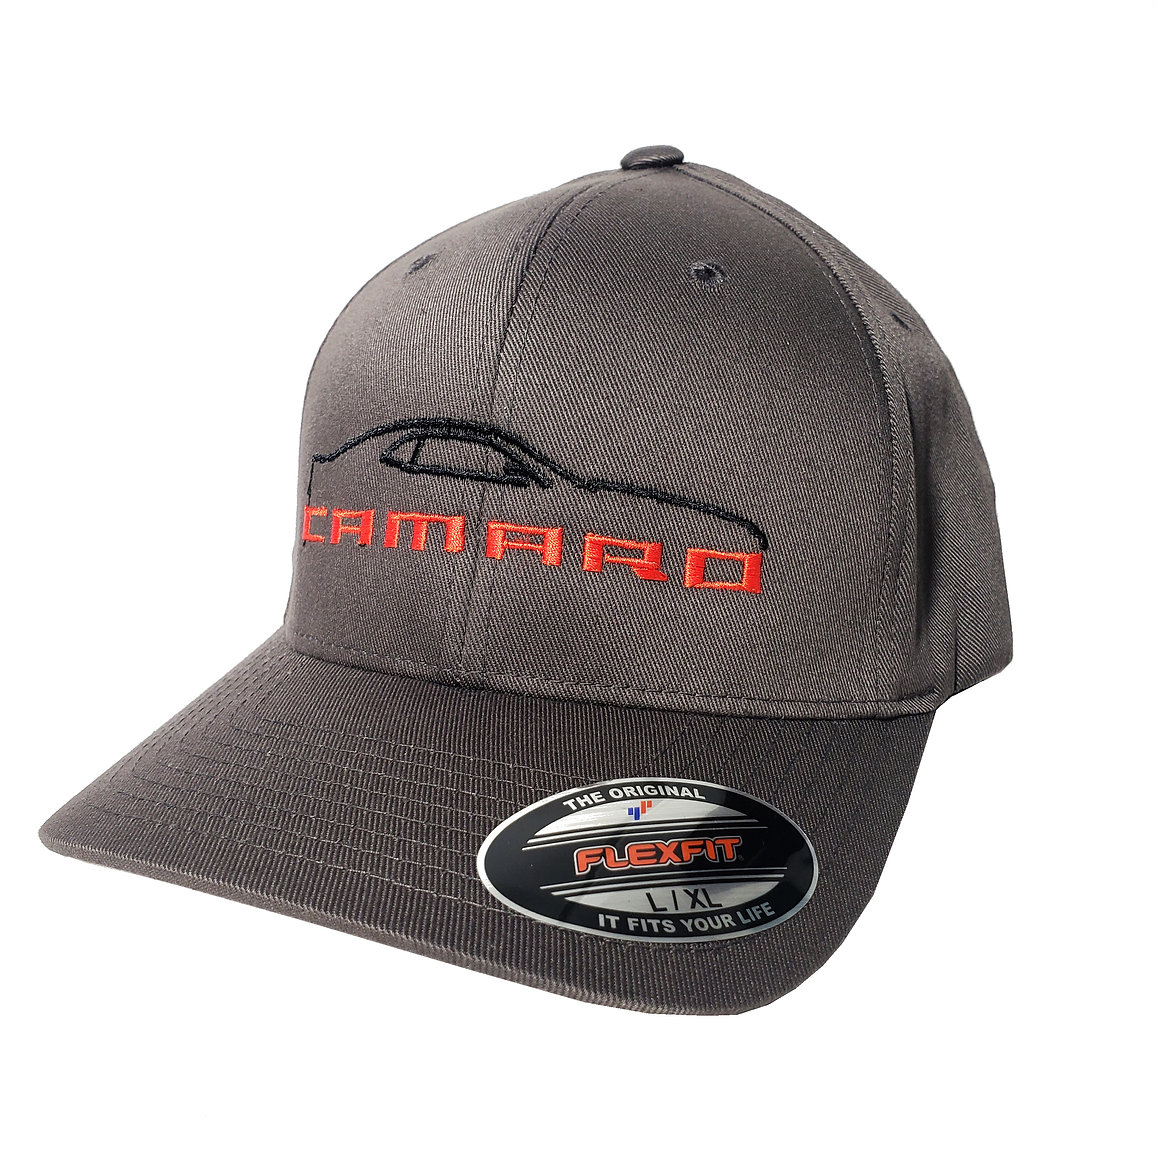 Gen Fit Silhouette On 5th Hat : Camaro Coast |West Black Flex Sale Camaro